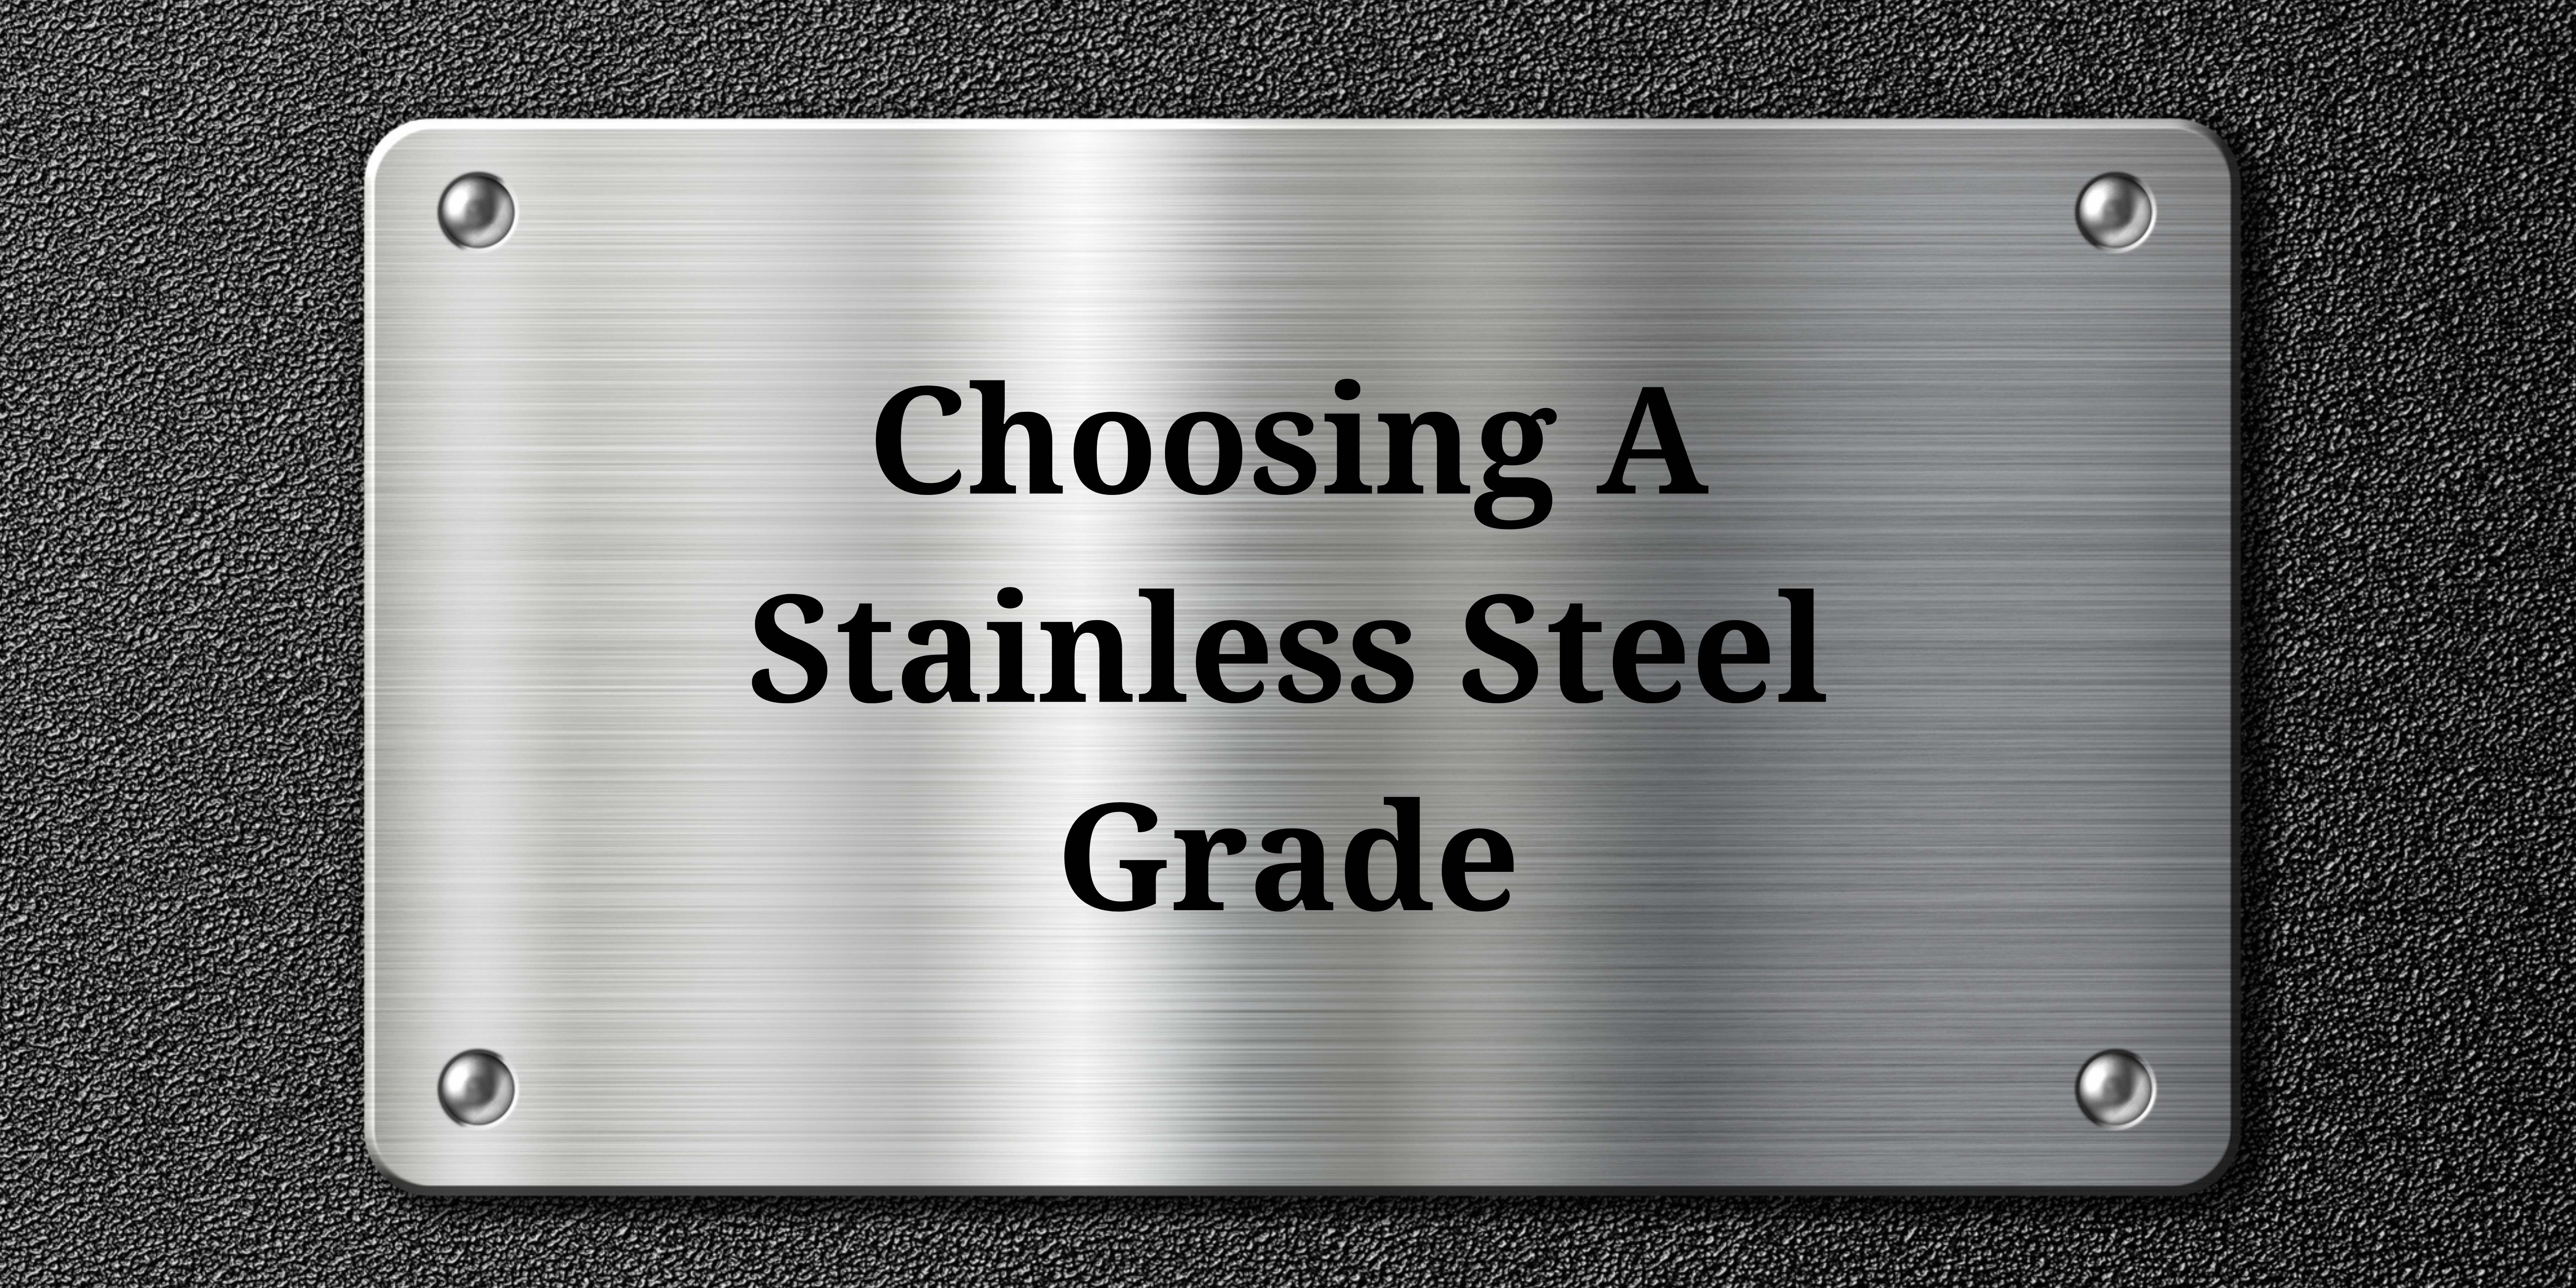 Choosing a stainiless steel grade